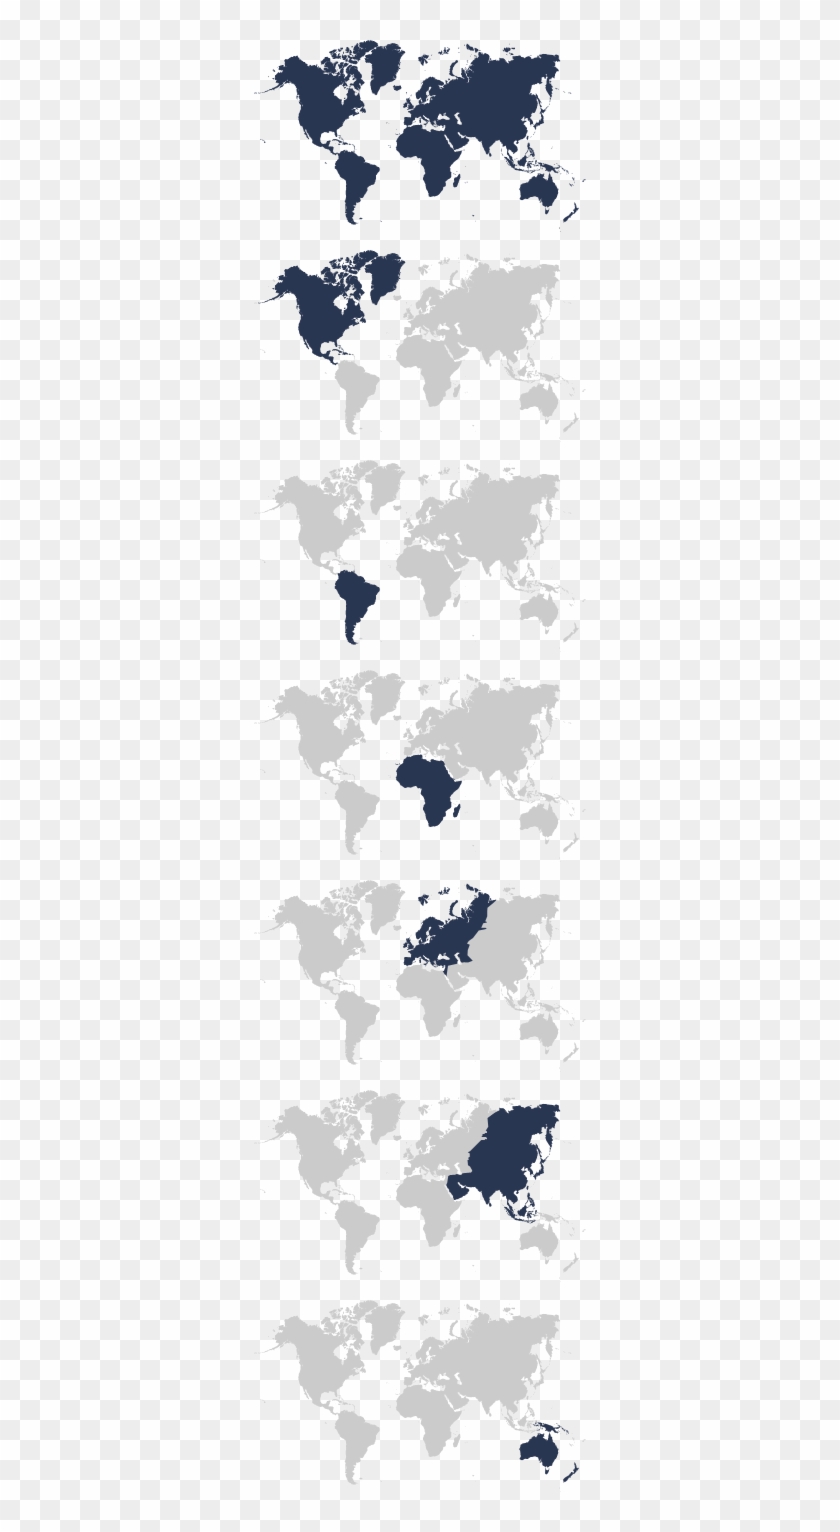 World Map 28 Nov 2012 - Africa South America Trex Clipart #5304749